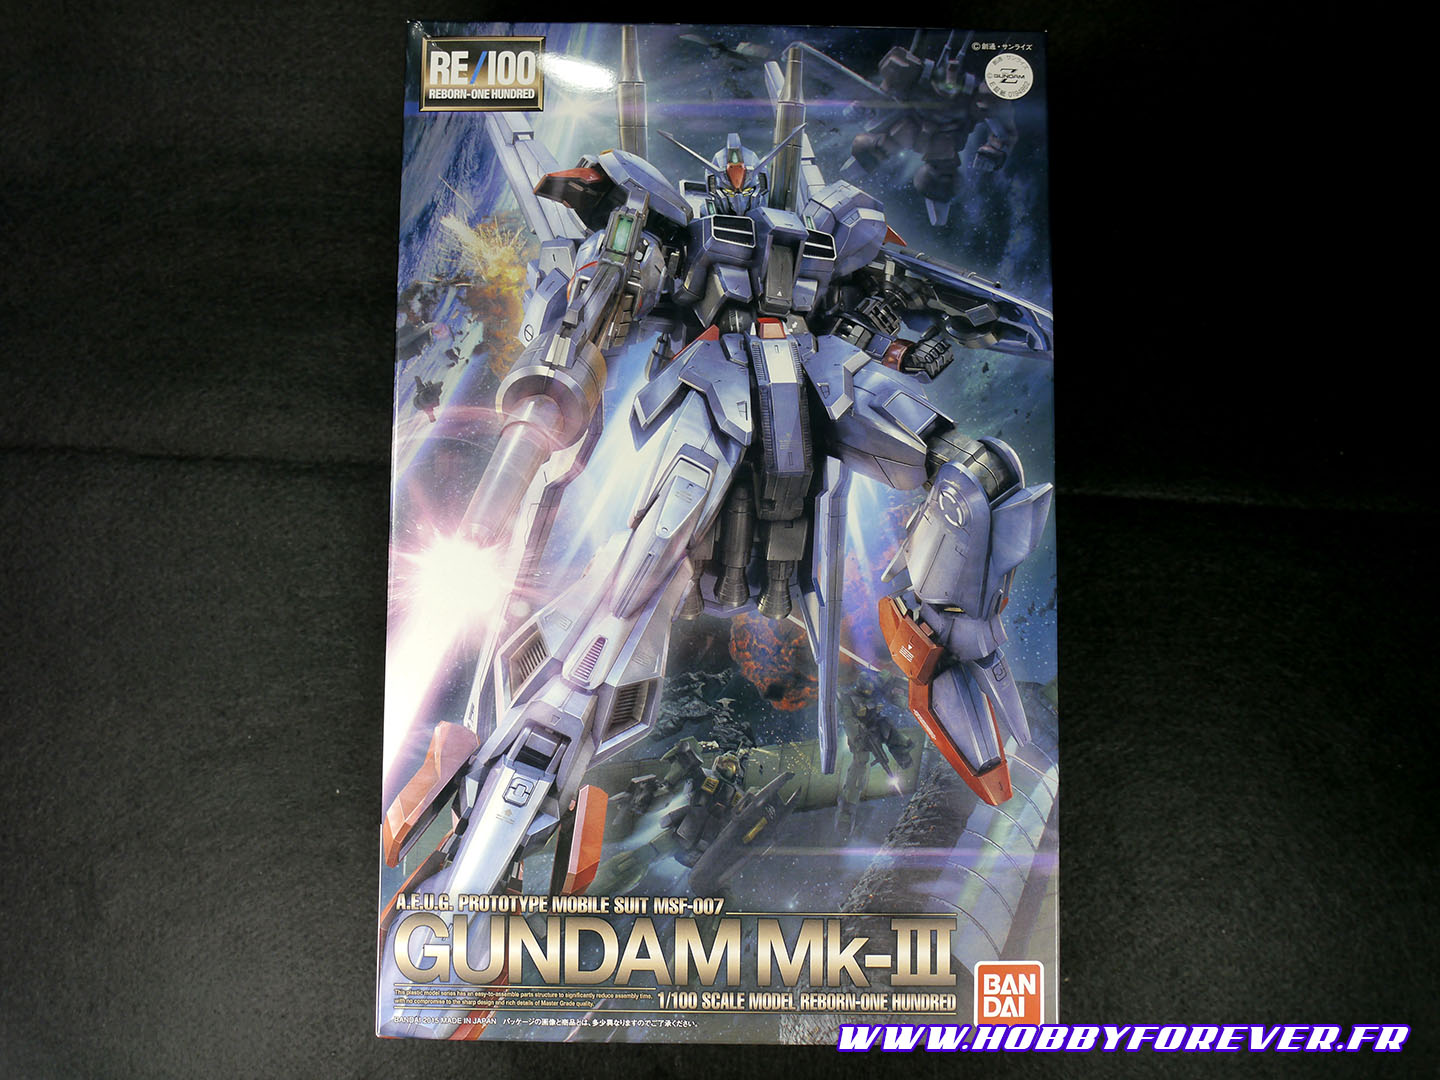 Boxart du RE/100 Gundam Mk-III